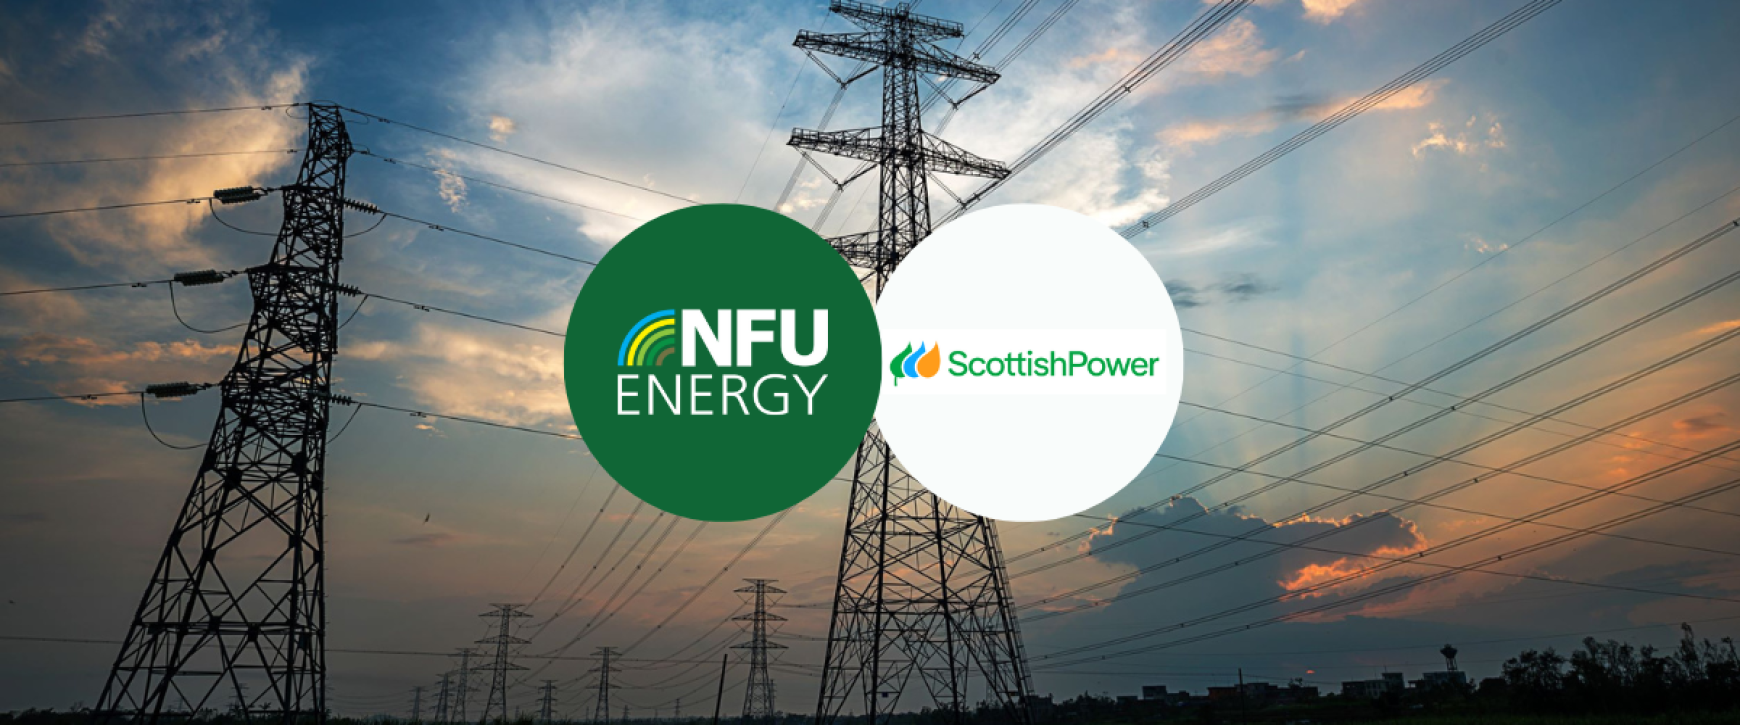 NFU Energy's Biggest Buying Group Yet with Scottish Power!